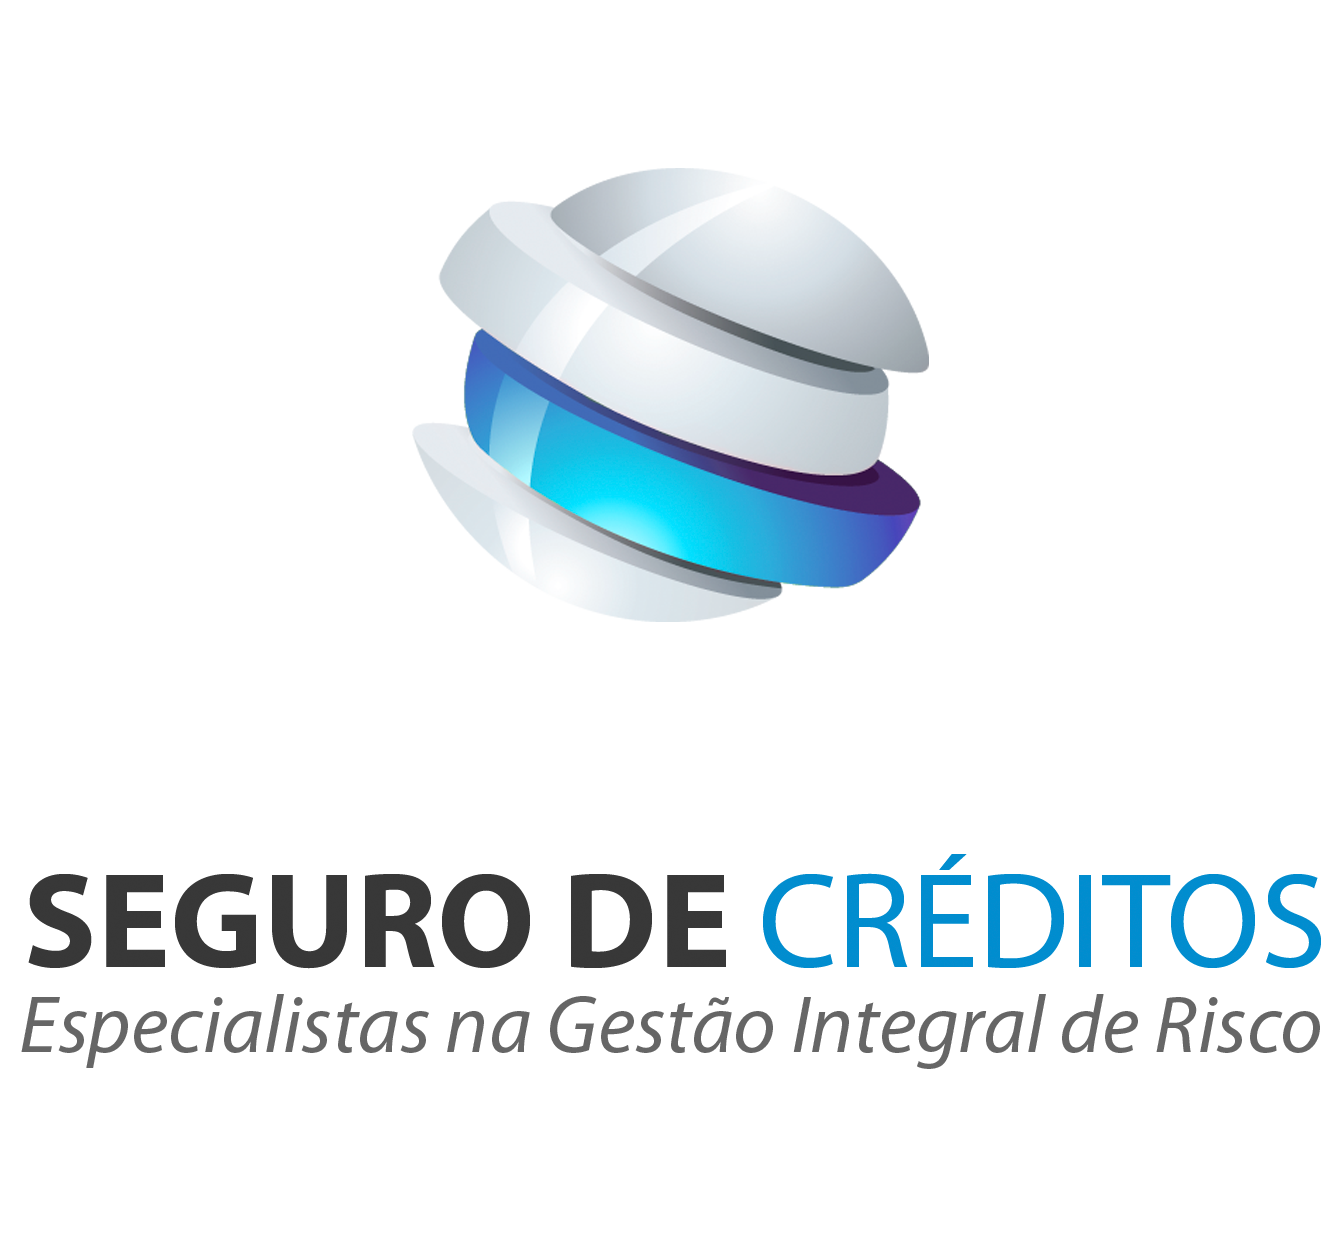 Seguro de Créditos - Logotipo Quadrado